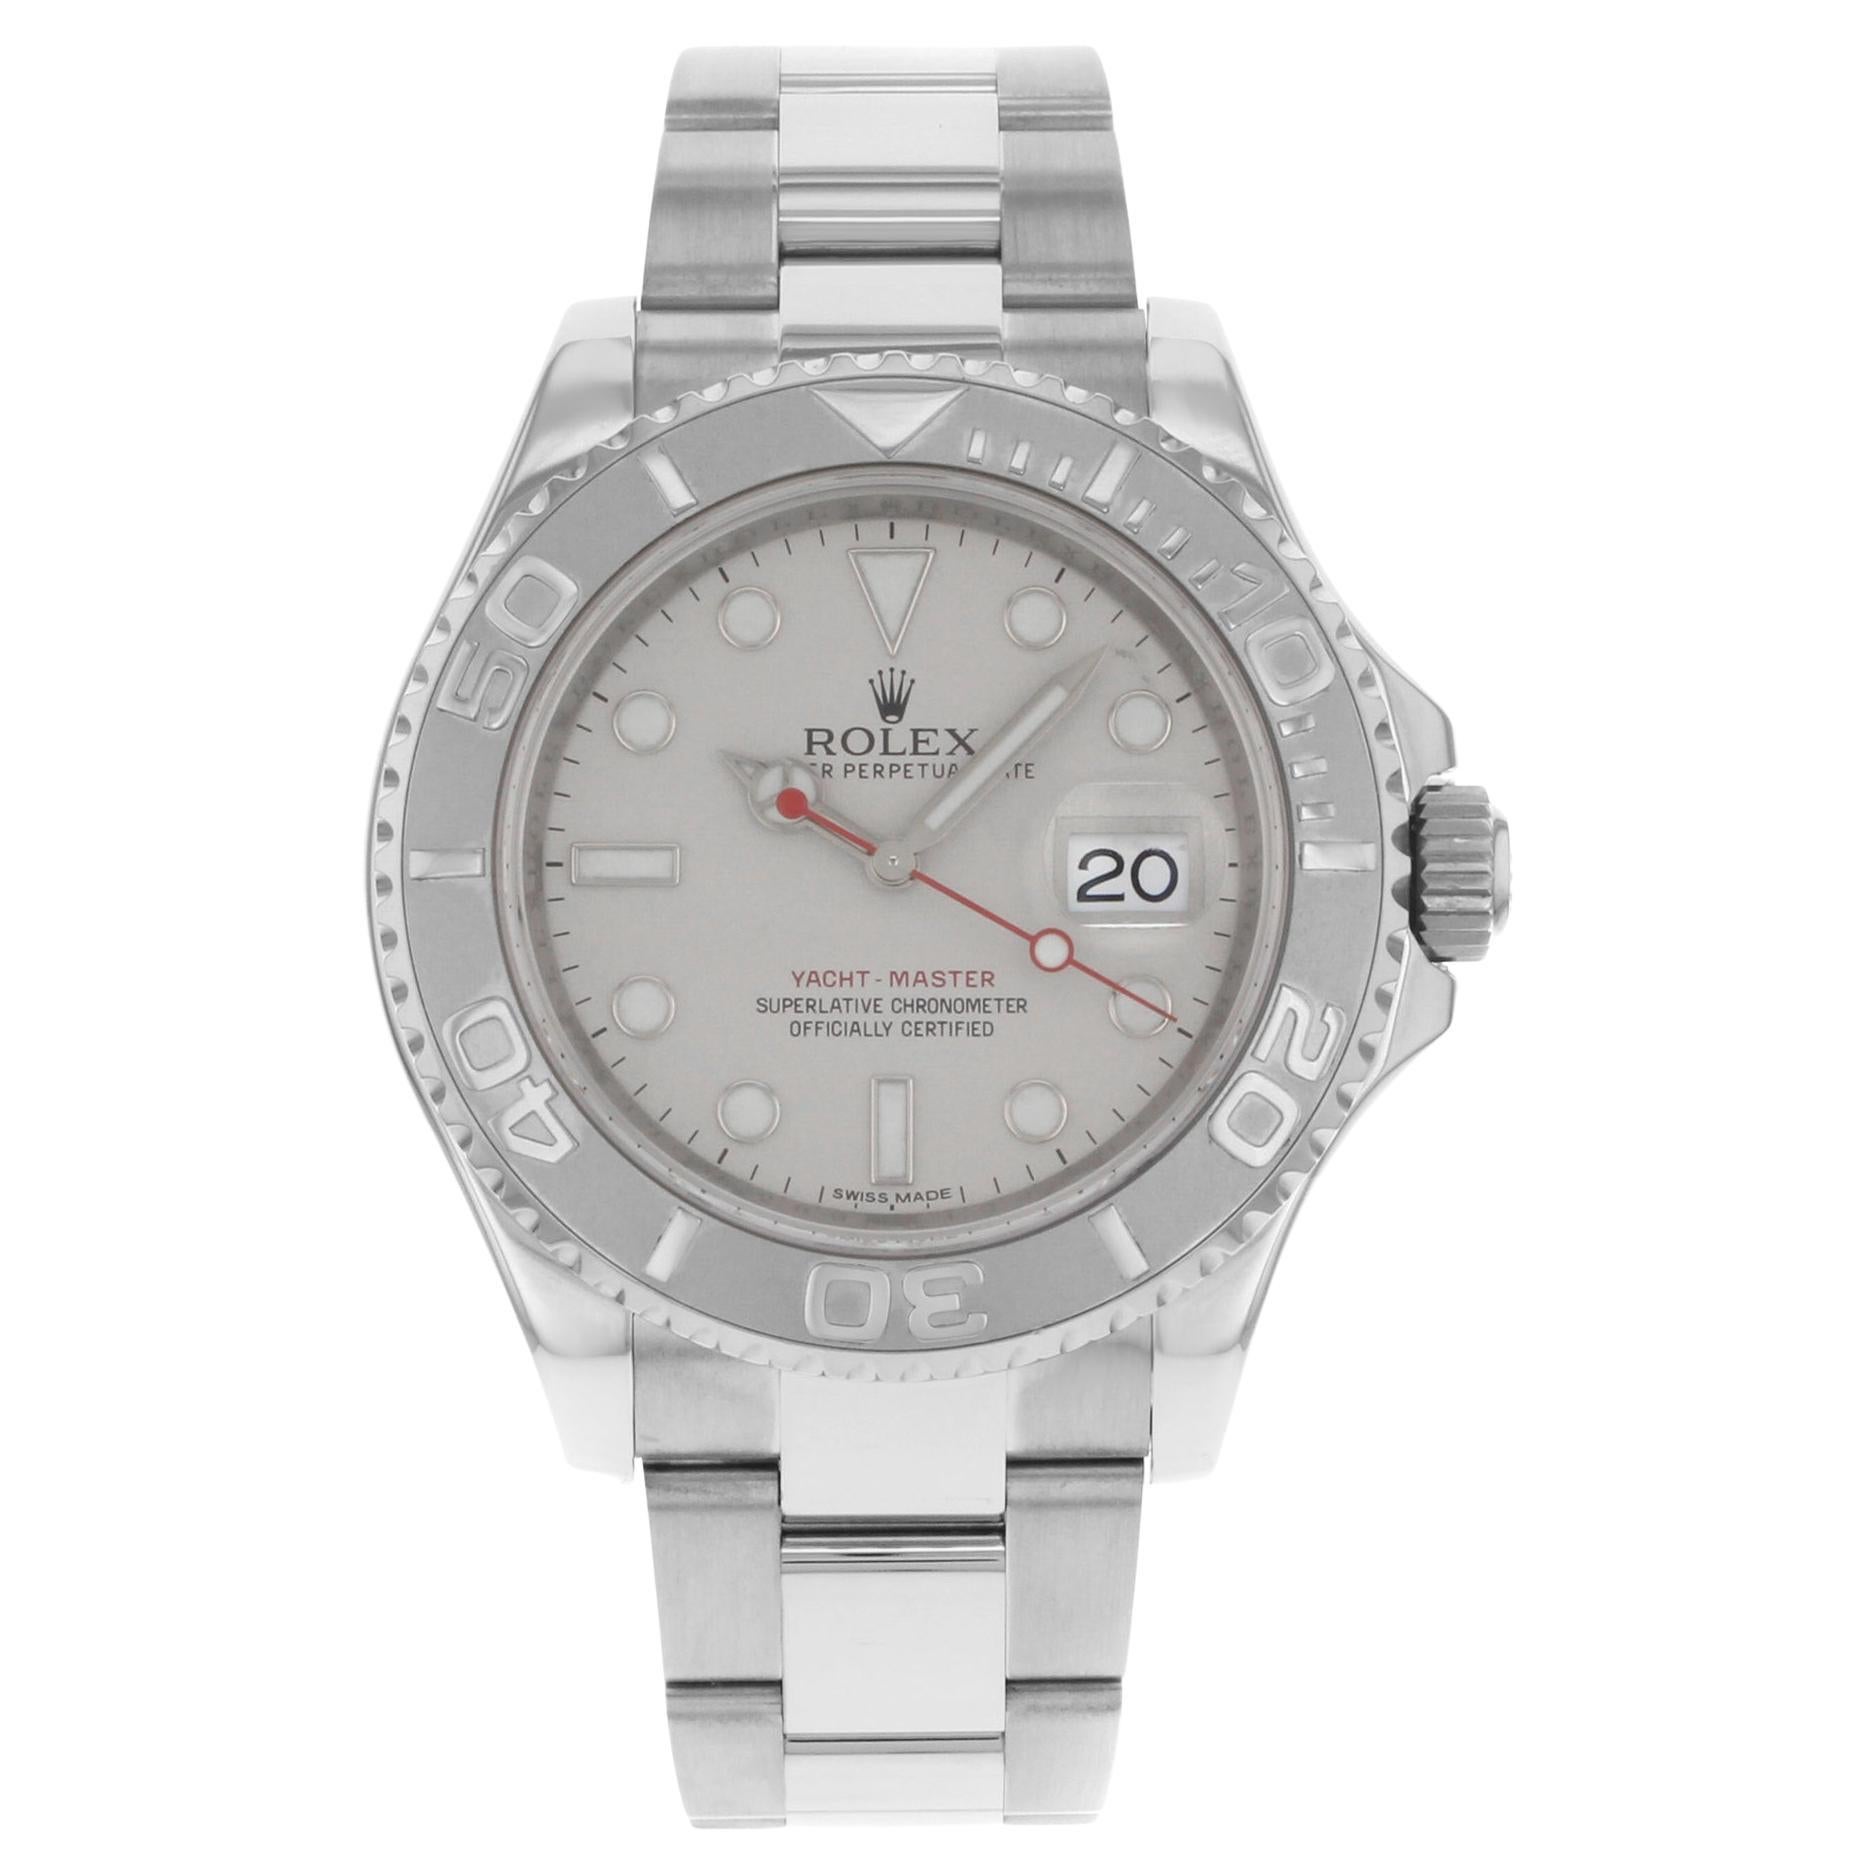 Rolex Yacht-Master Steel Platinum Bezel Gray Dial Automatic Watch 116622